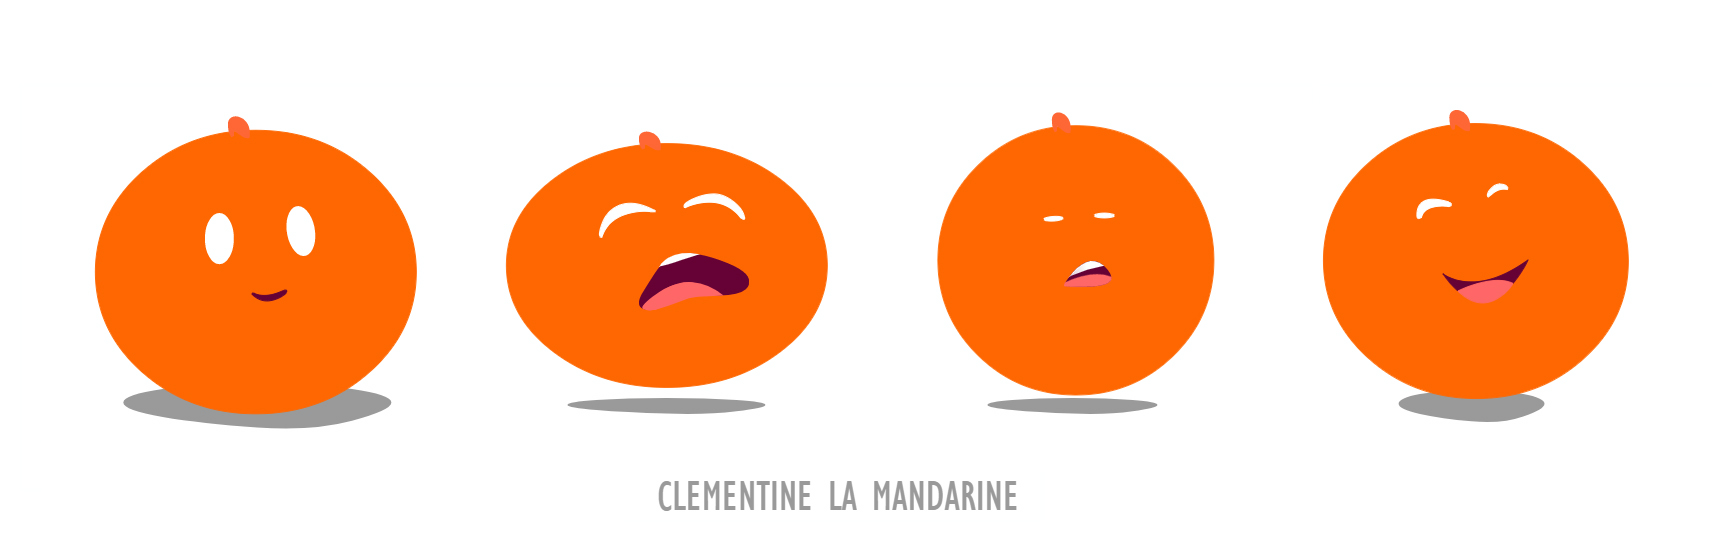 Clémentine la mandarine